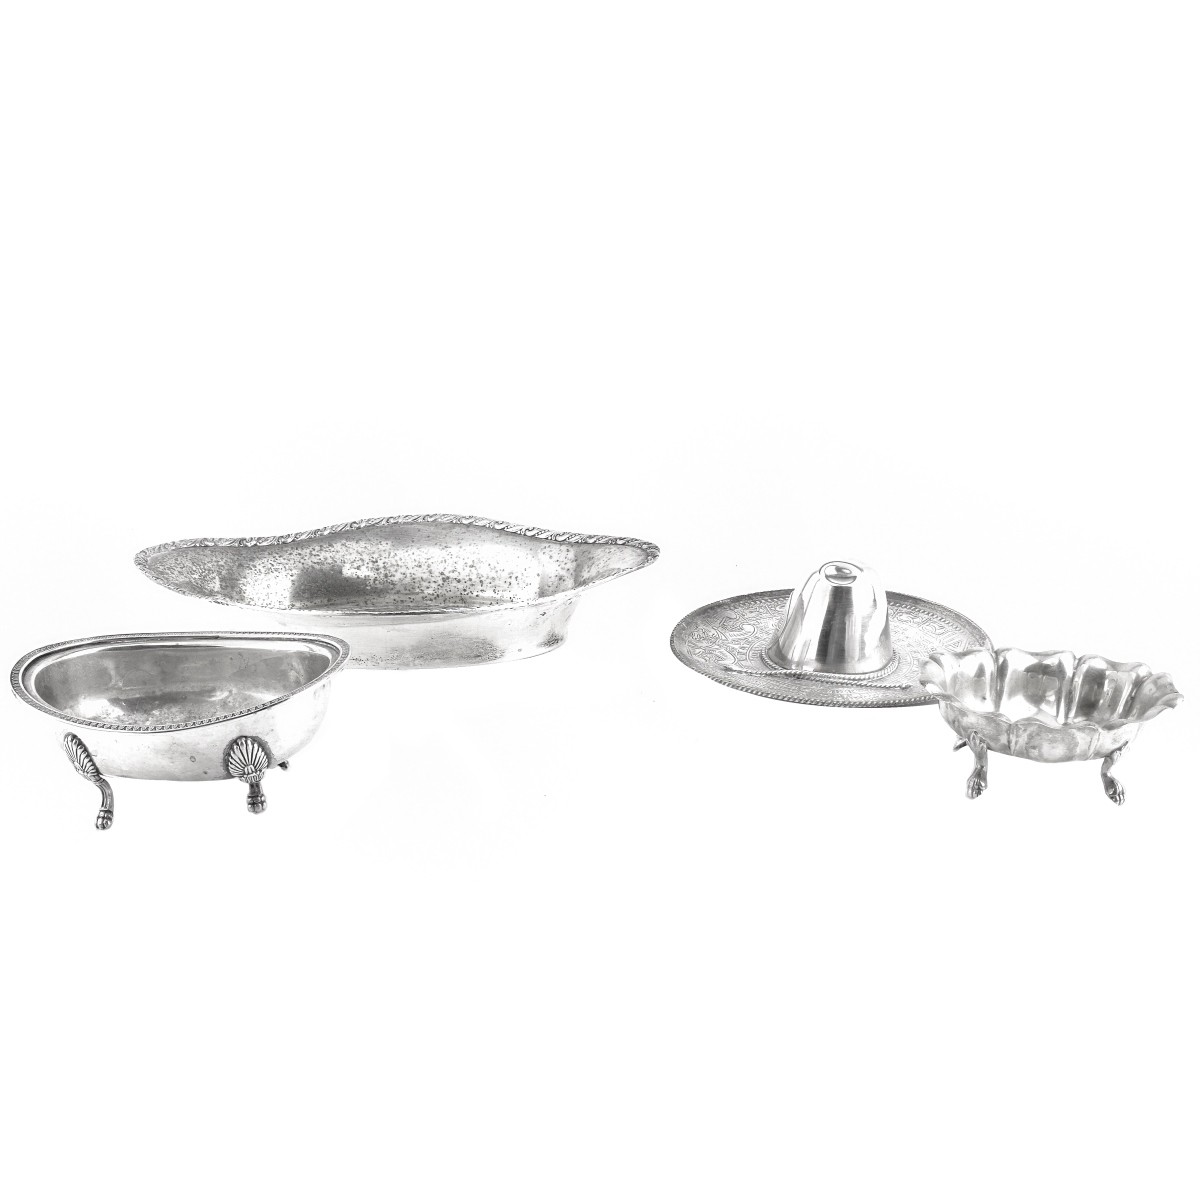 (4) Vintage 800 and 925 Silver Tableware